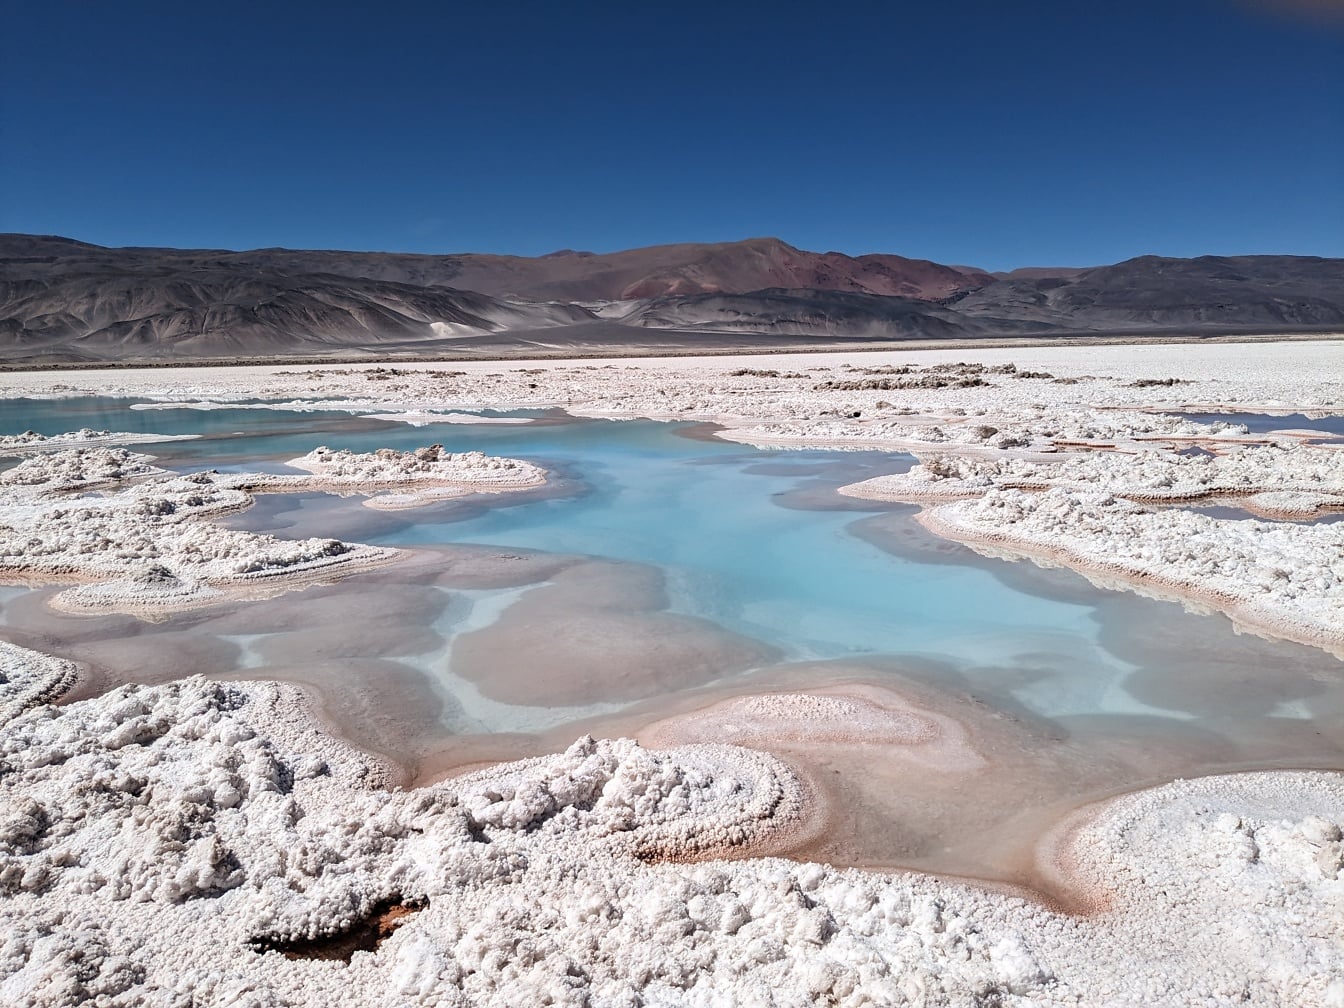 Salar de Antofalla, slana močvarna oaza sa sedimentima soli na sušnoj pustinjskoj visoravni